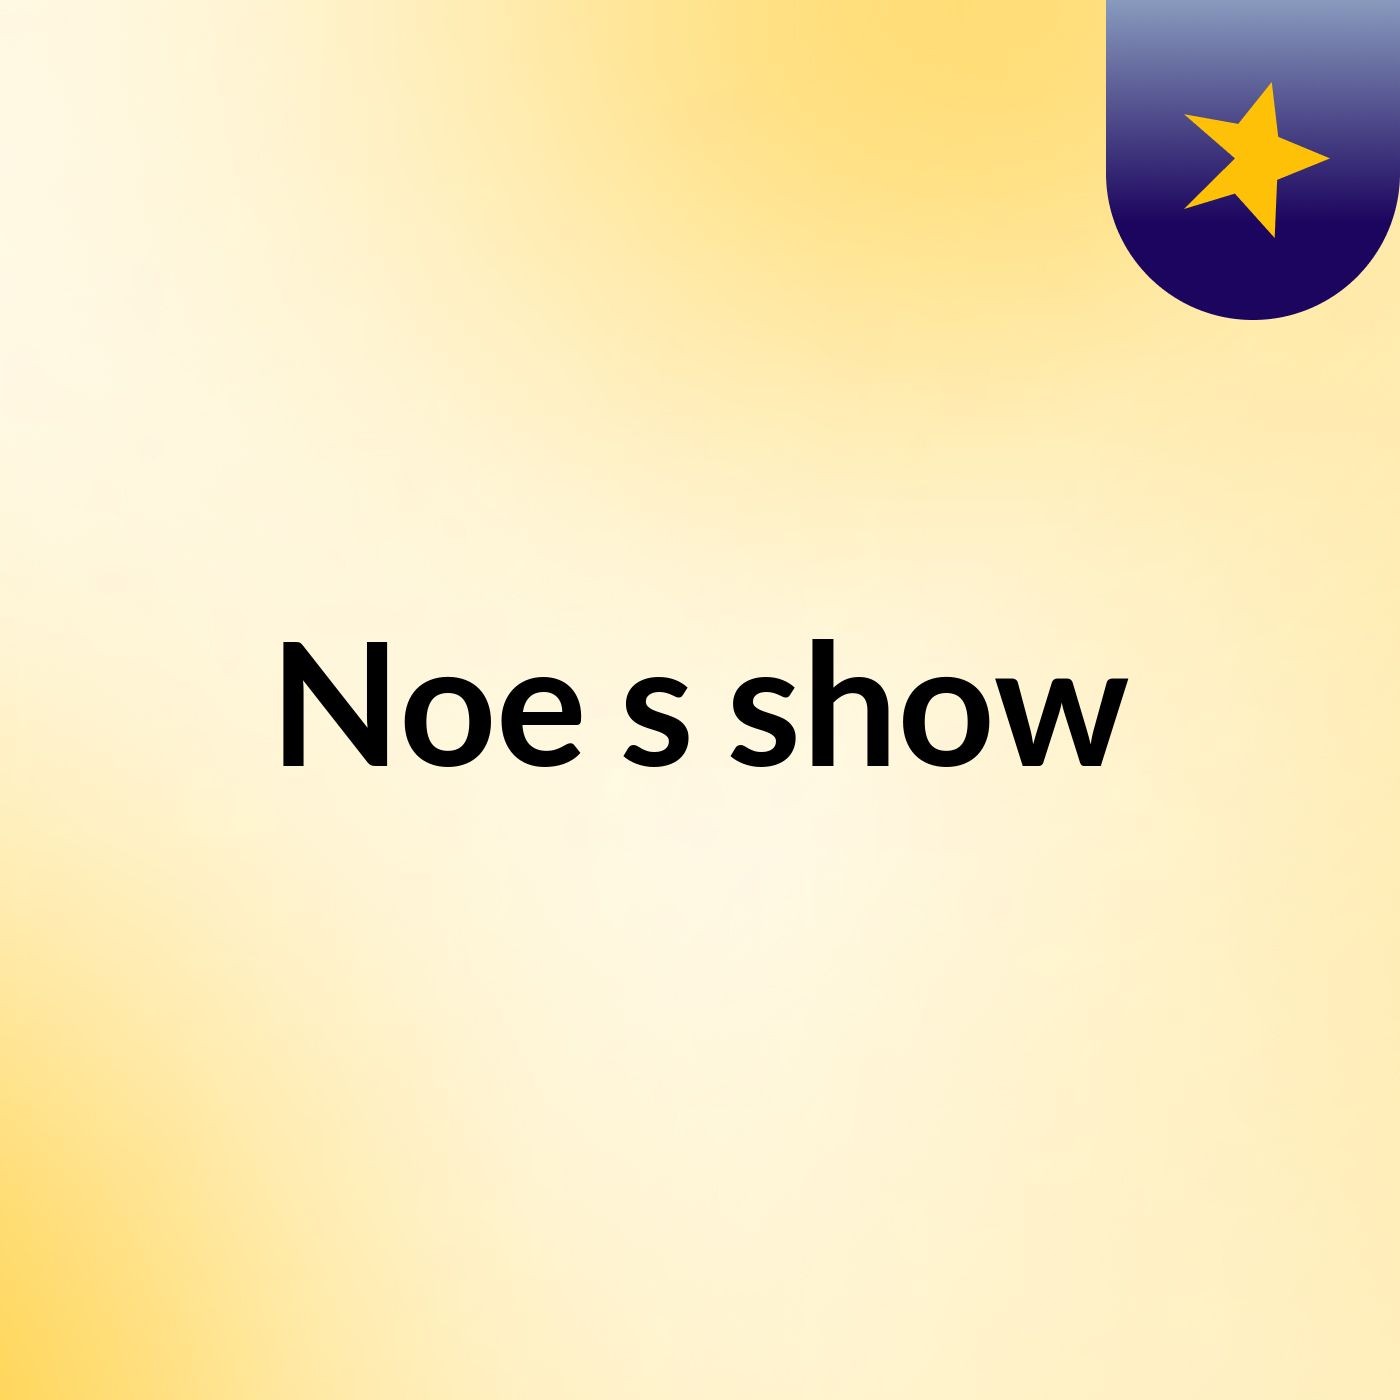 Noe's show